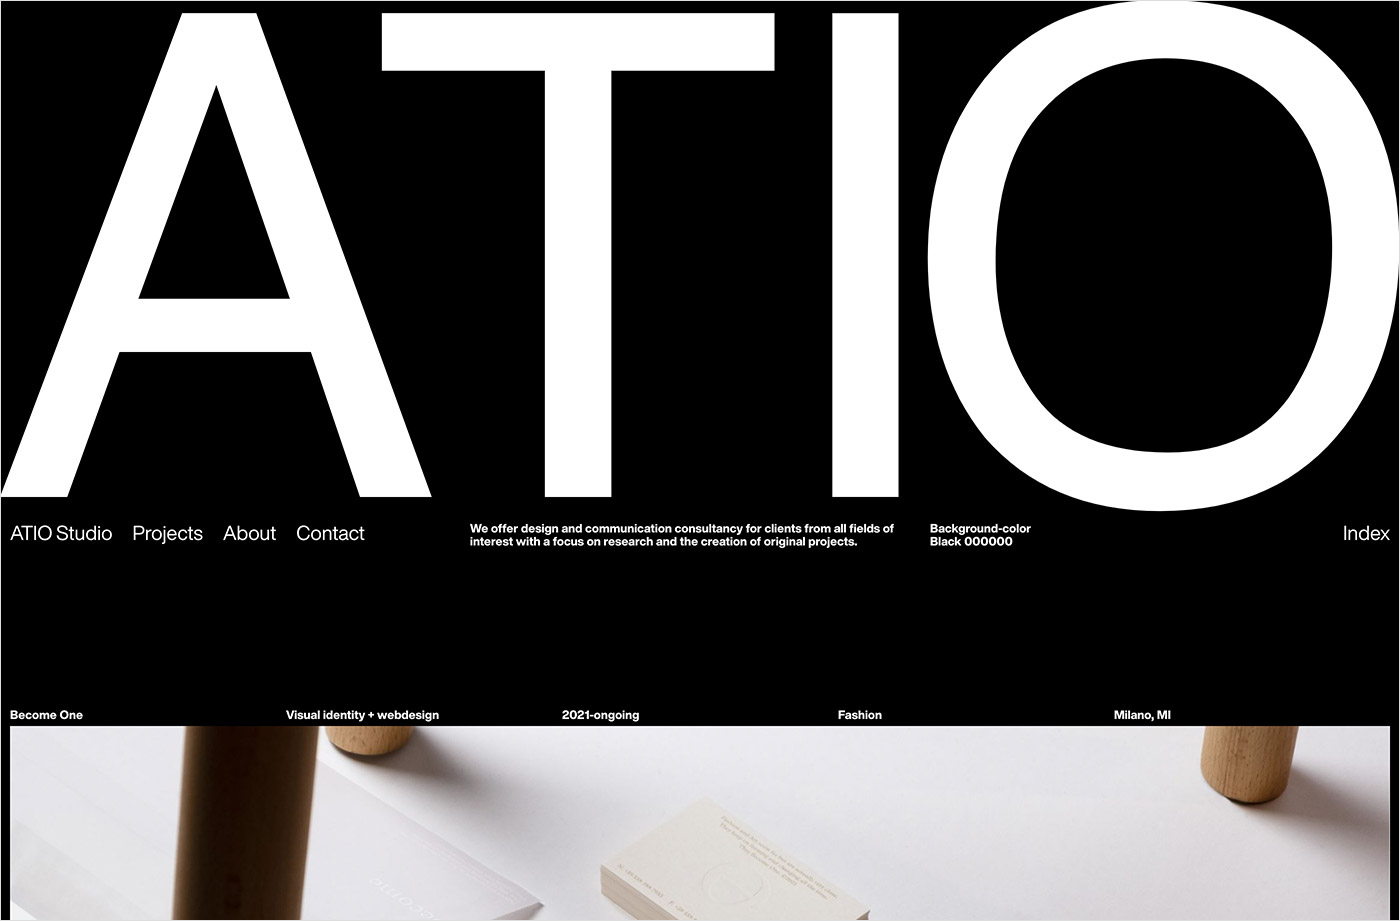 ATIO Studioウェブサイトの画面キャプチャ画像